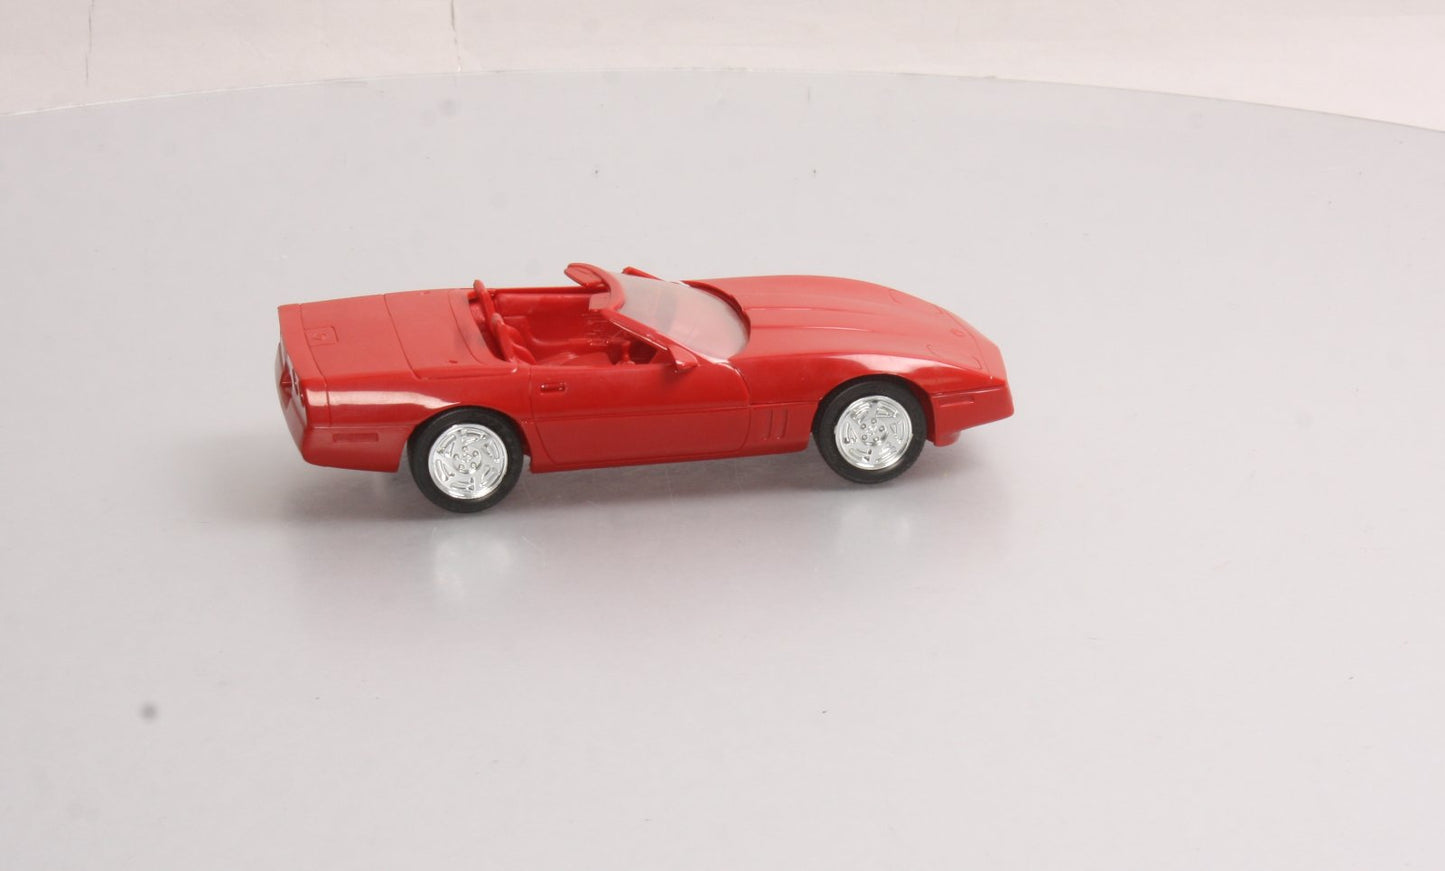 AMT 6044 1:25 Ertl Bright Red 1990 Chevrolet Corvette Convertible Promo Car